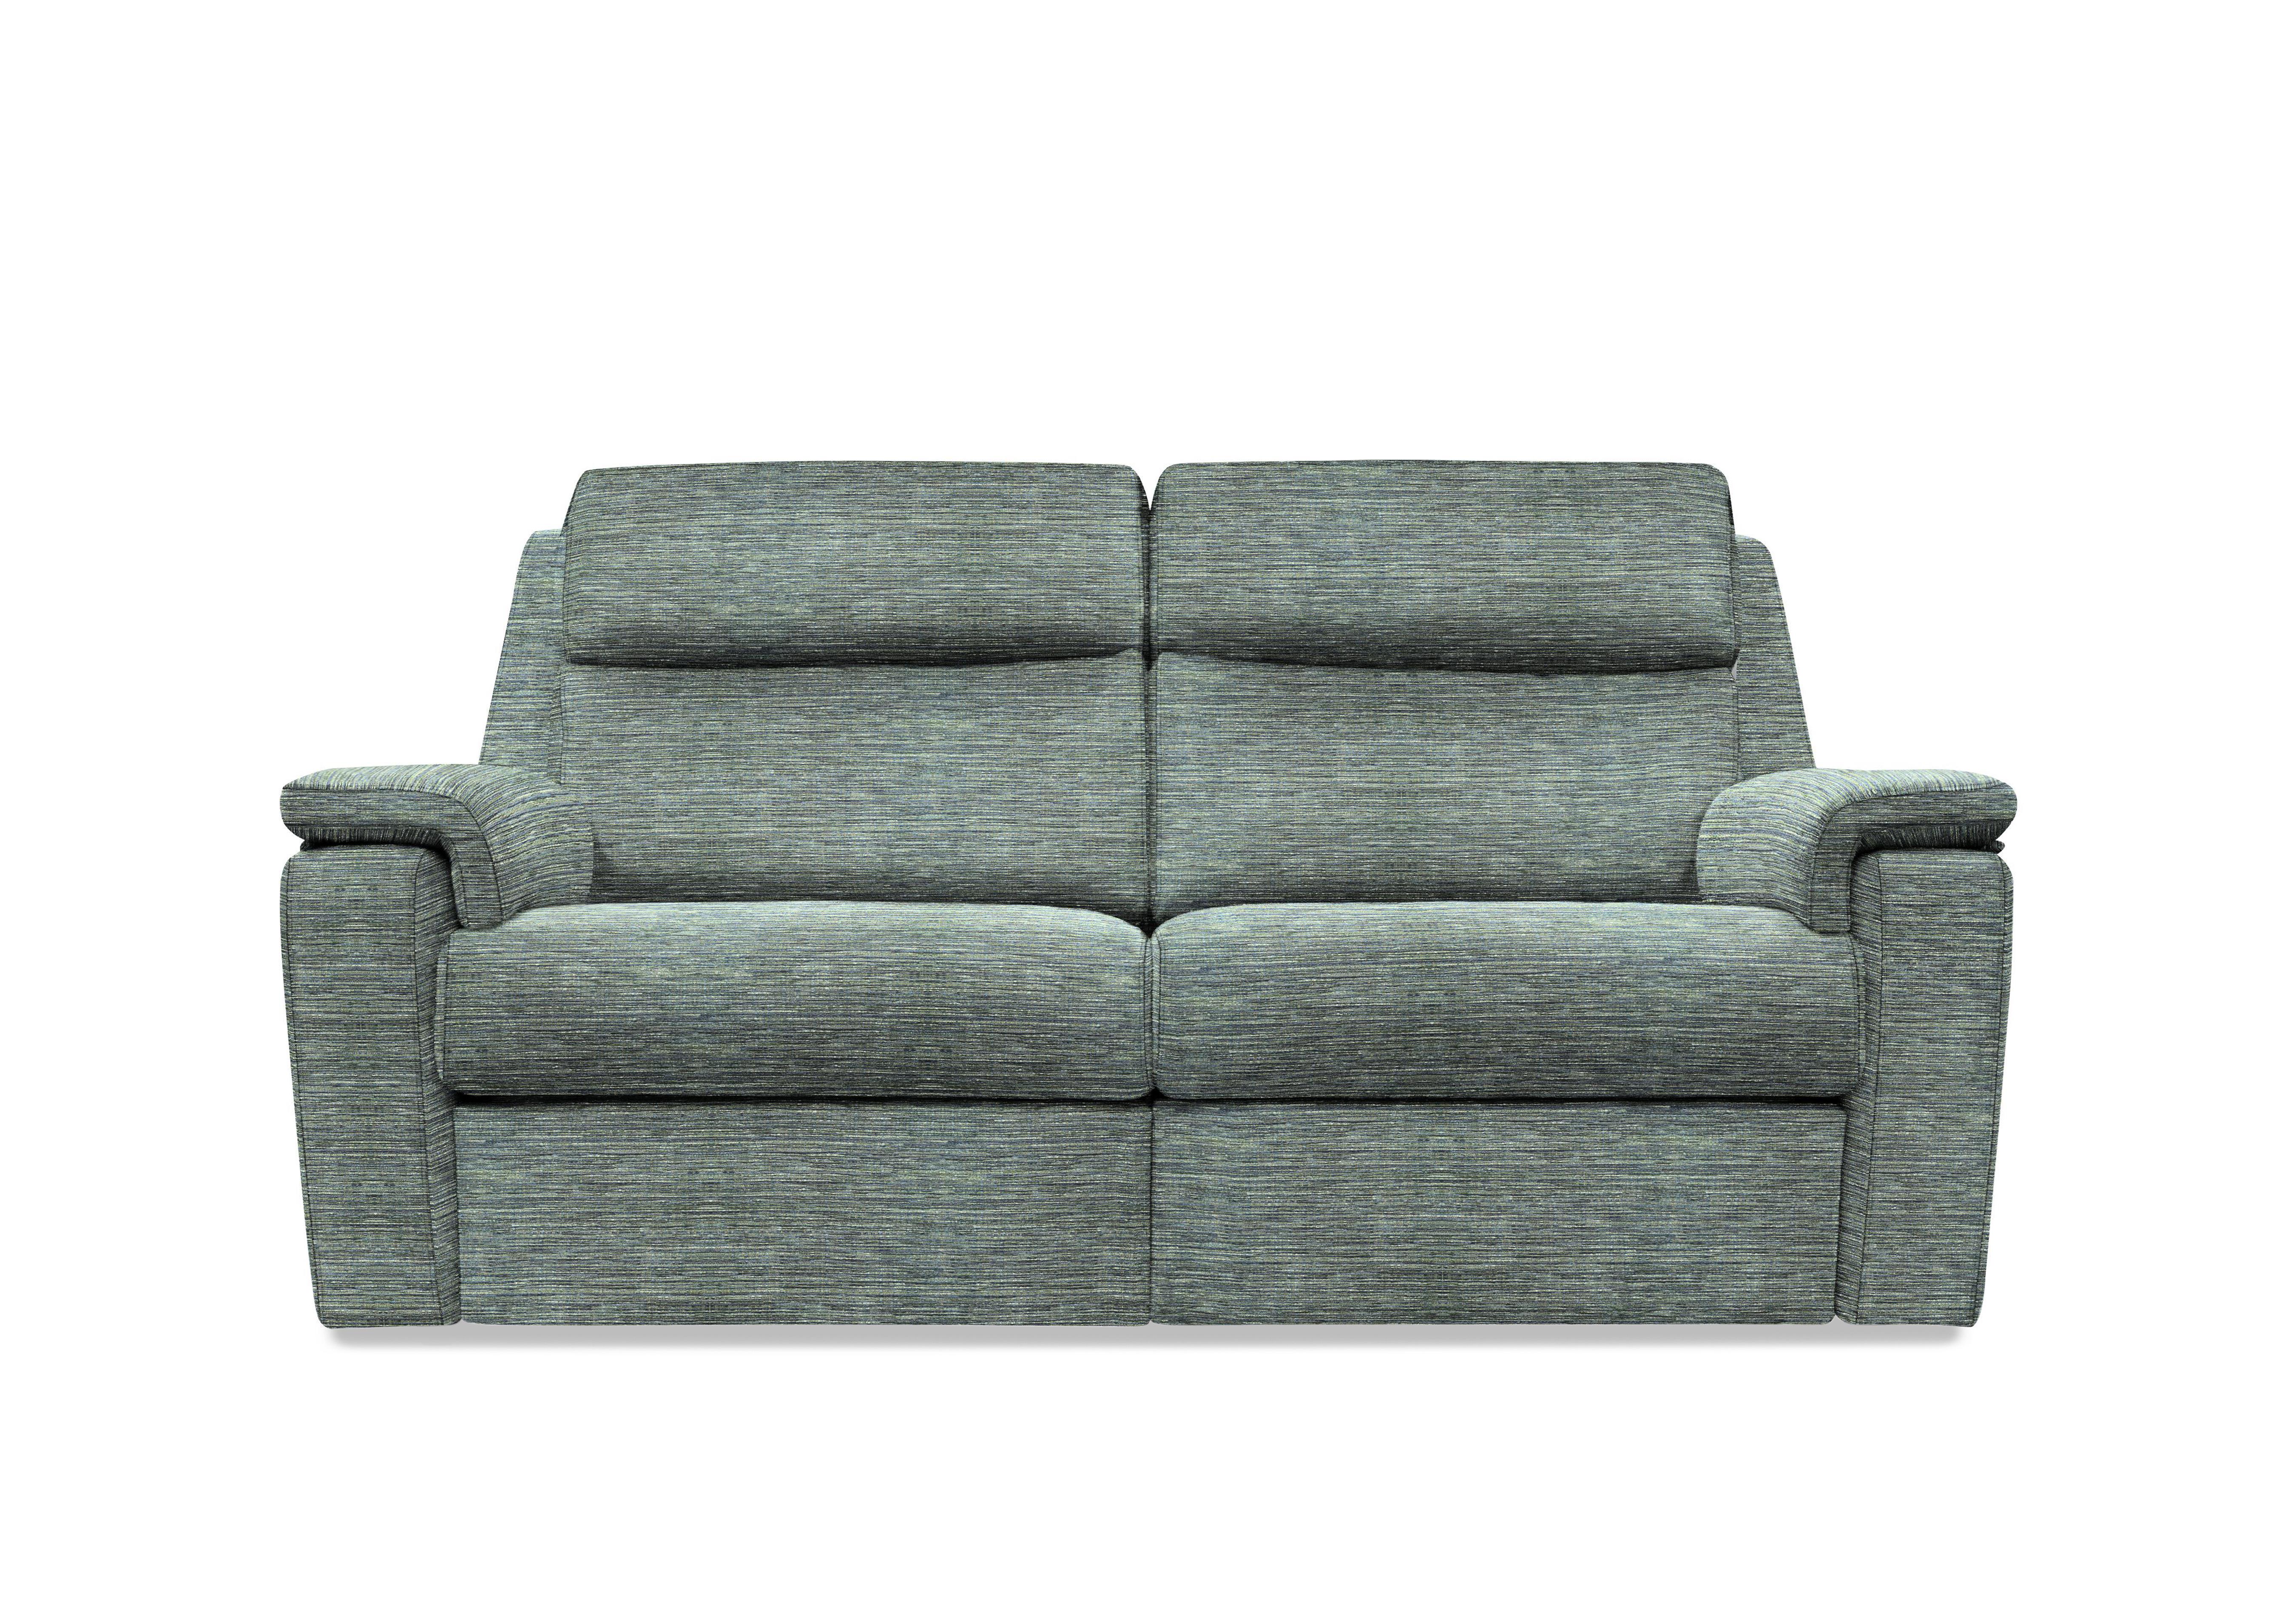 Thornbury 3 Seater Fabric Sofa in B925 Waffle Marine on Furniture Village